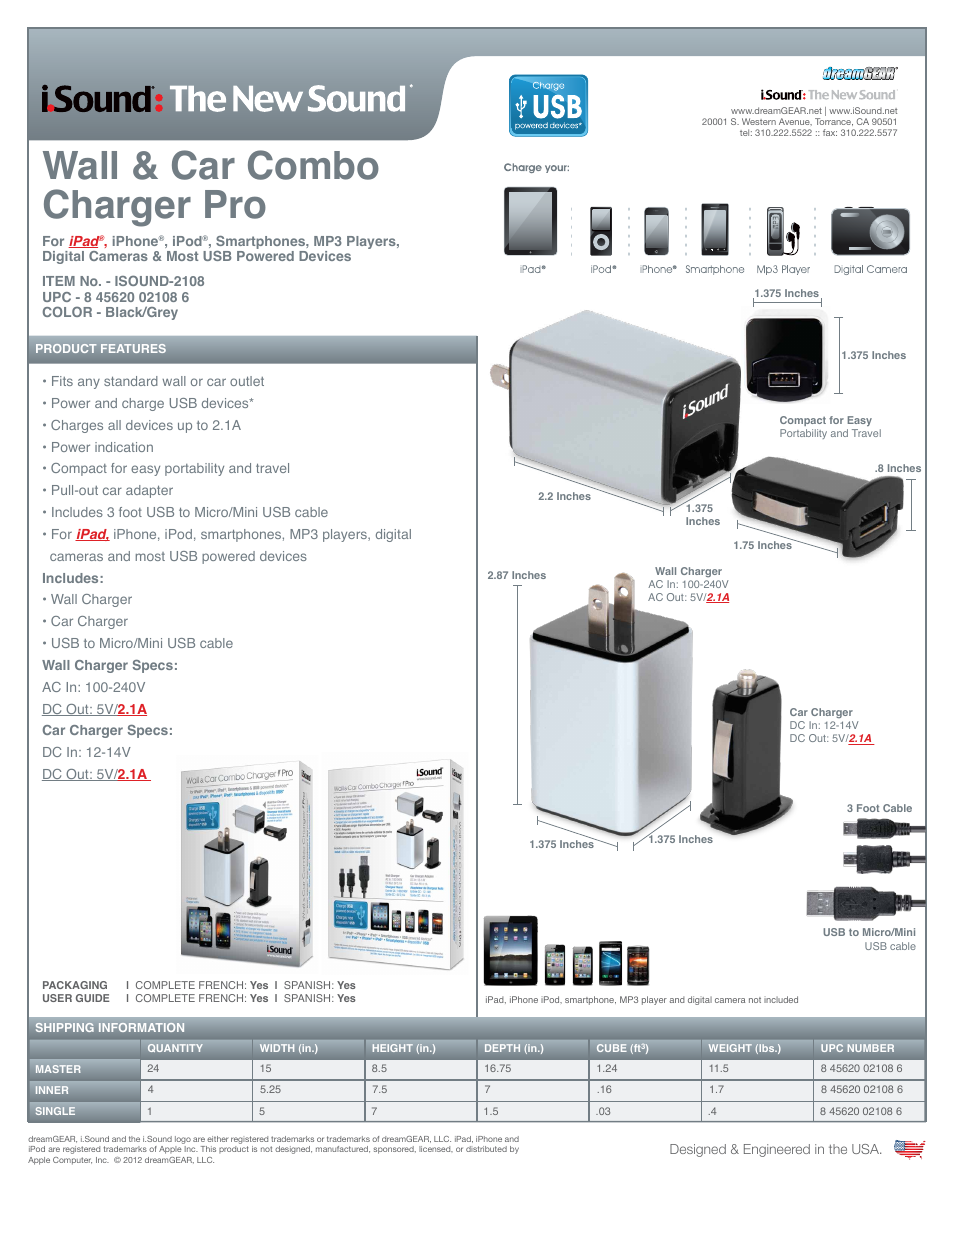 Wall & Car Combo Charger Pro 2108 - Sell Sheet